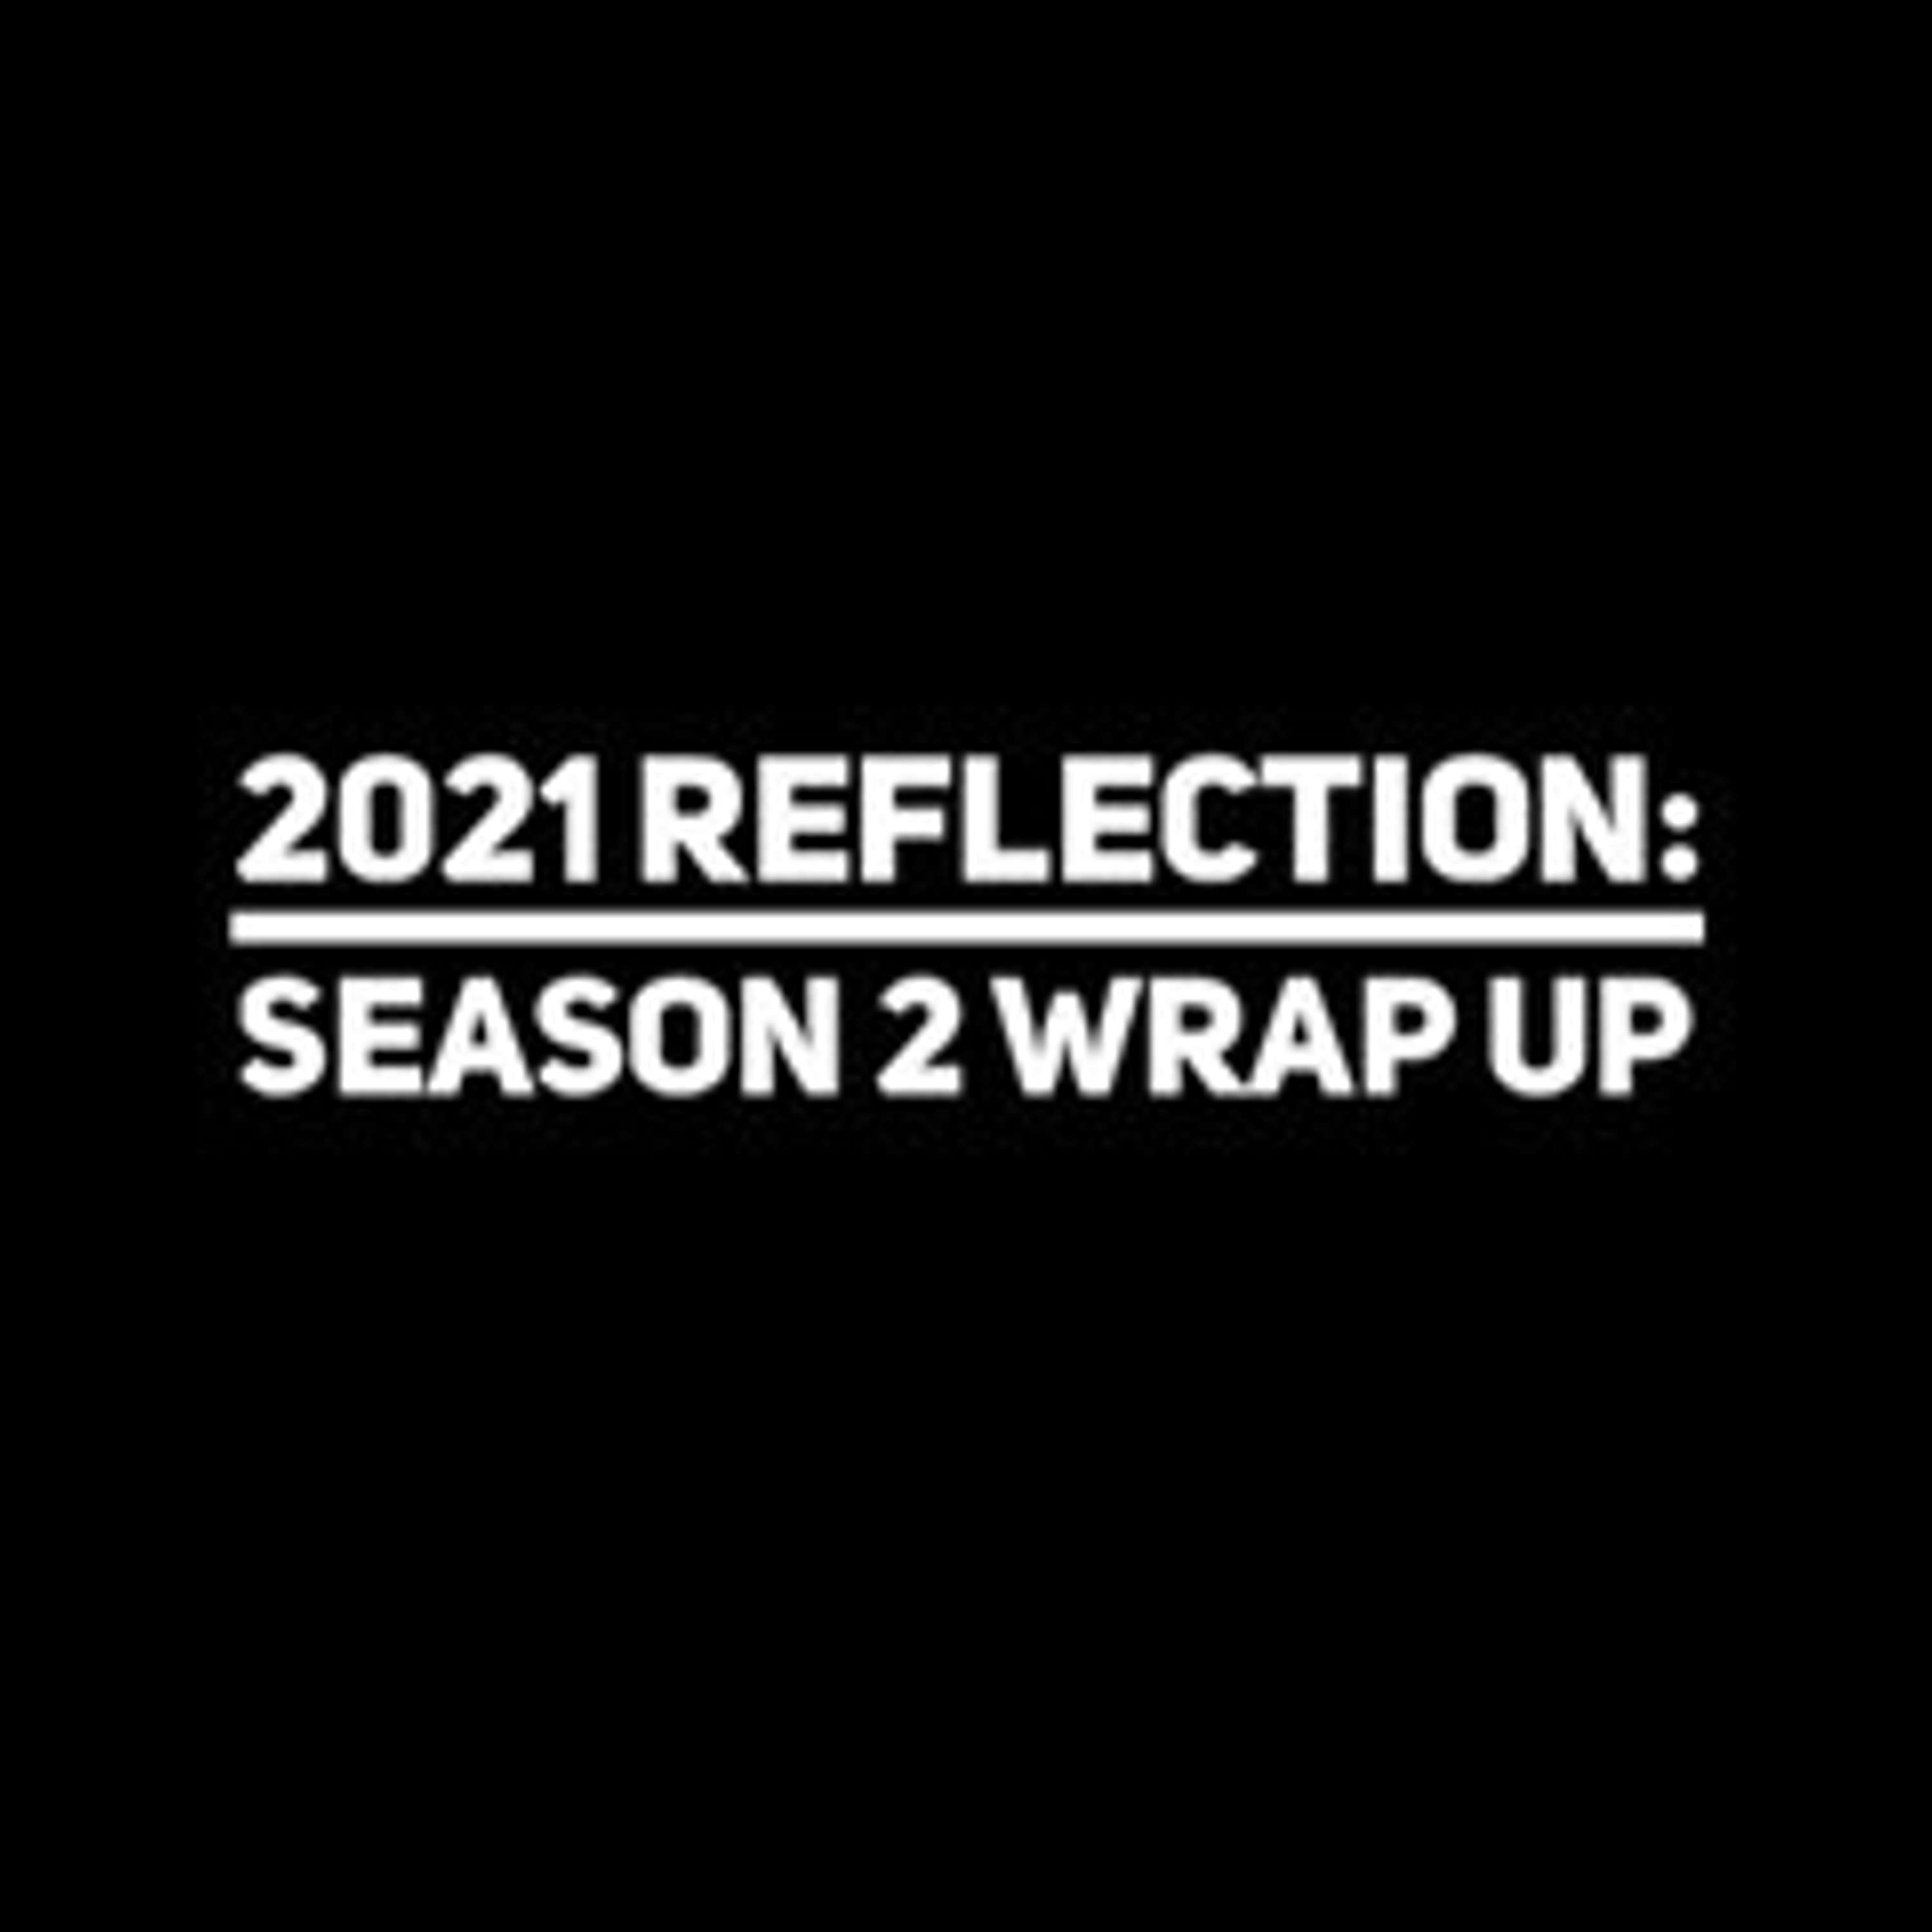 2021 Reflection: Season 2 Wrap Up